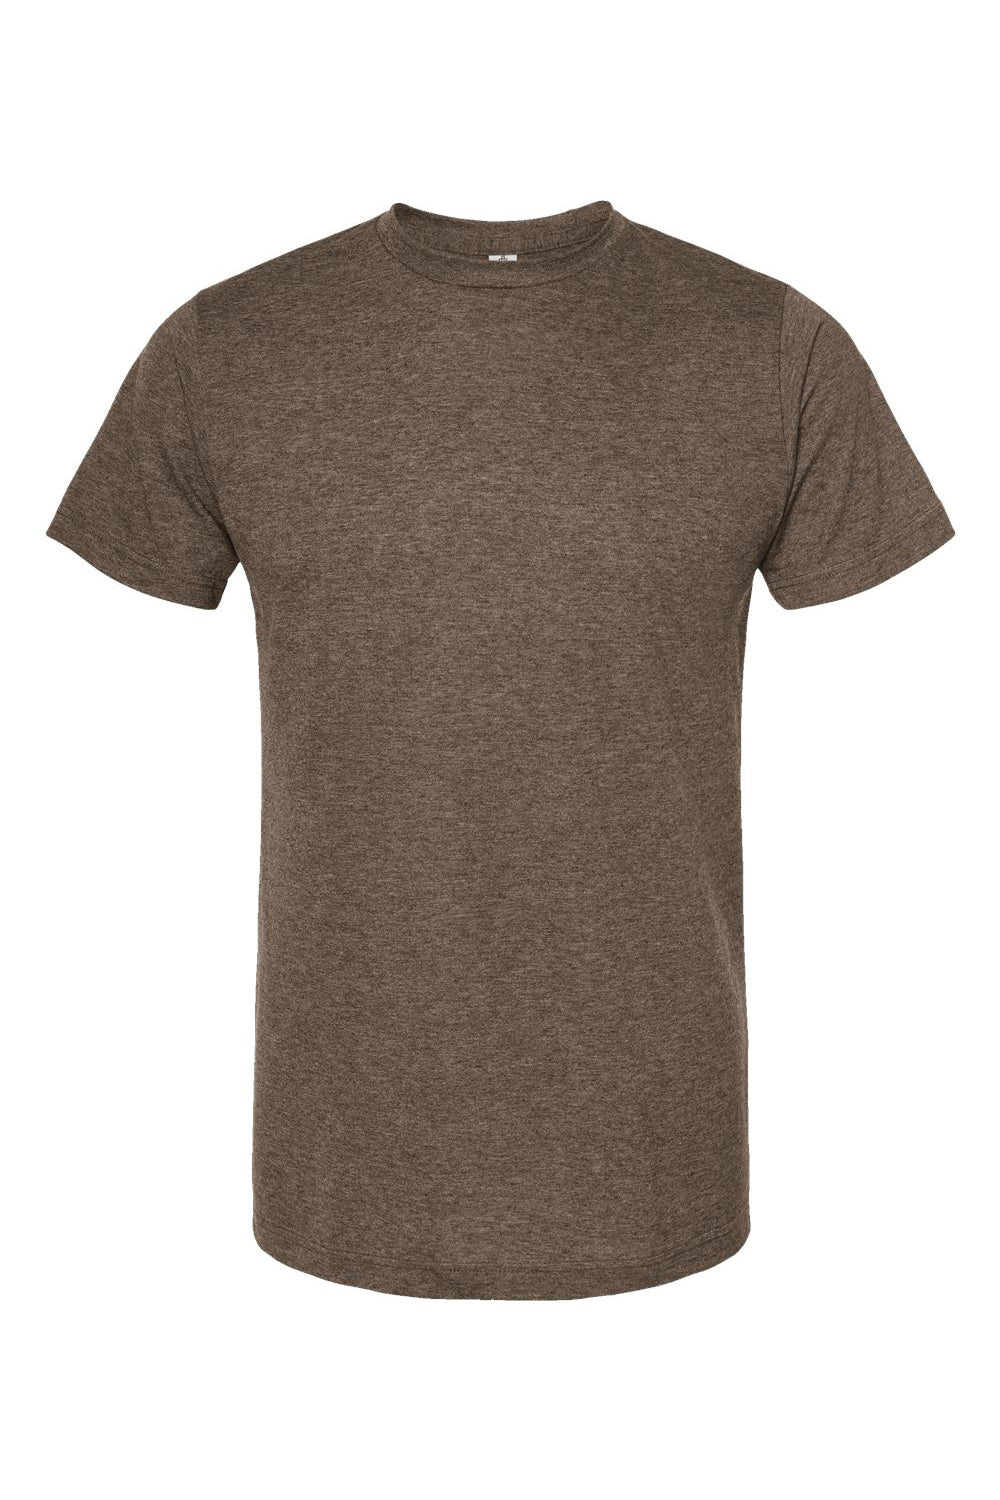 Tultex 241 Mens Poly-Rich Short Sleeve Crewneck T-Shirt Heather Brown Flat Front